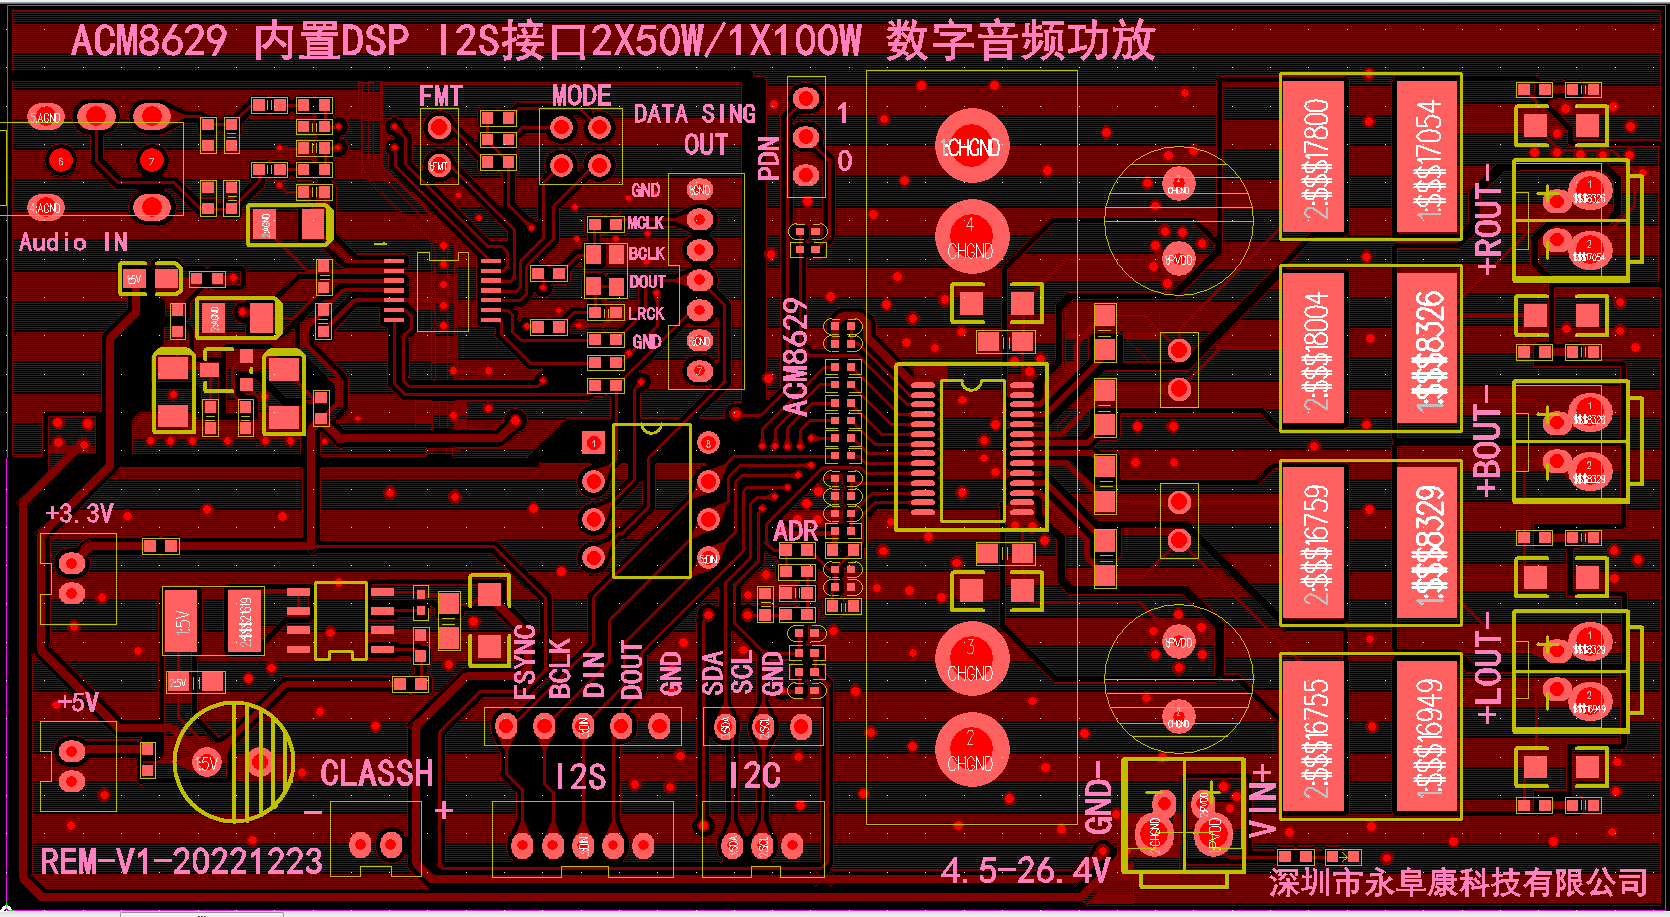 5、ACM8629 DEMO板PCB底层设计图